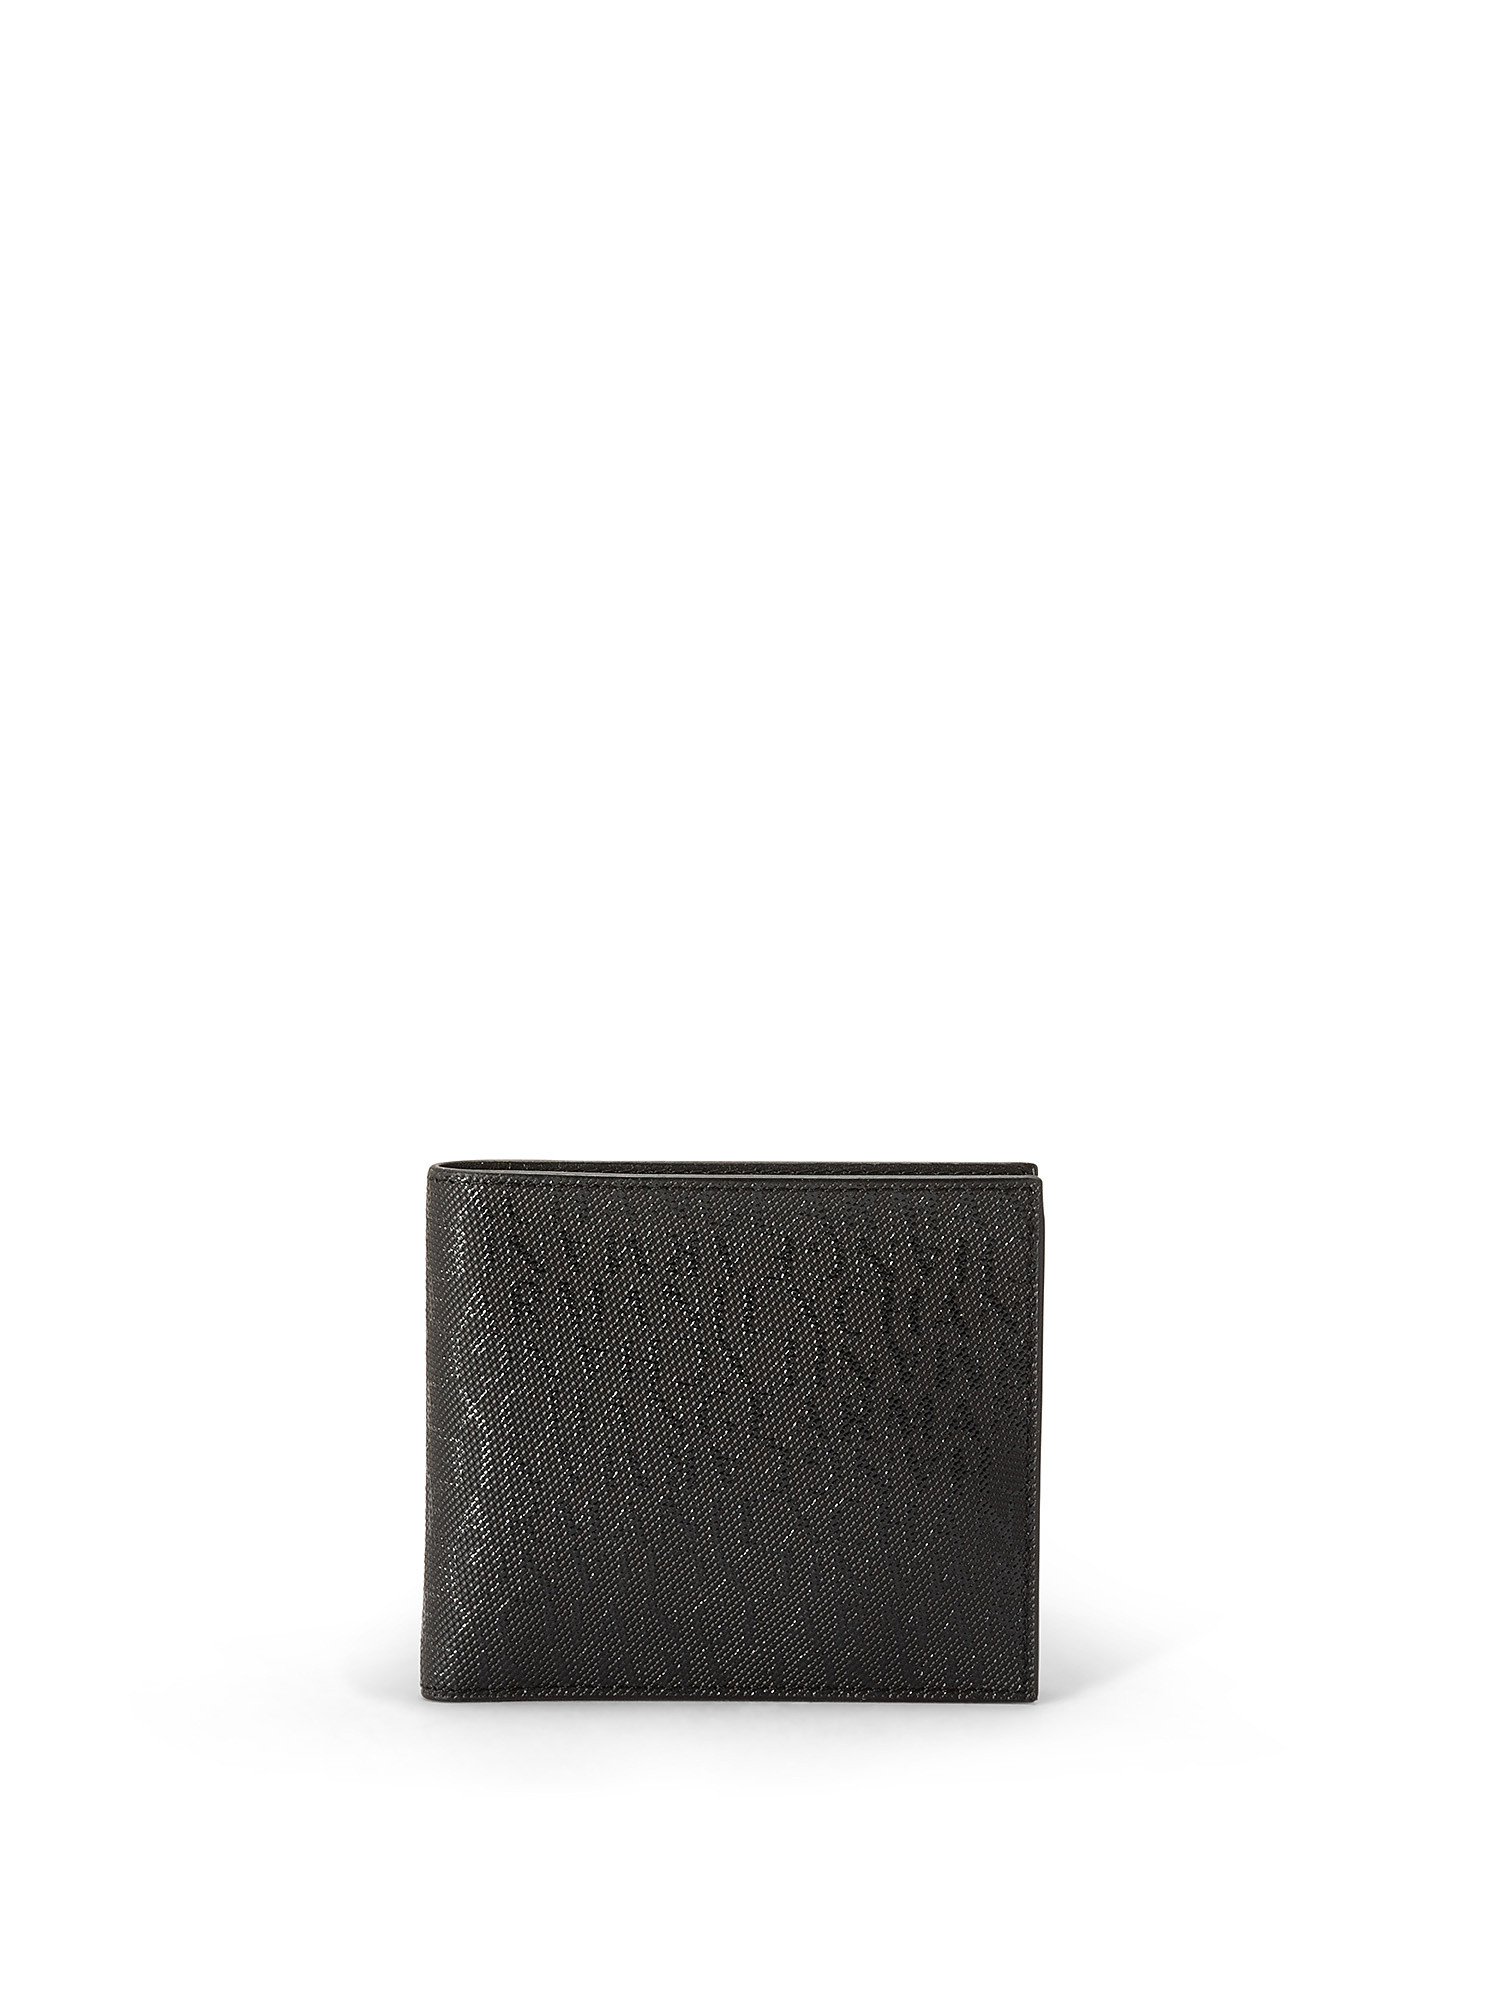 Armani Exchange - Wallet with all-over logo, Black, large image number 0